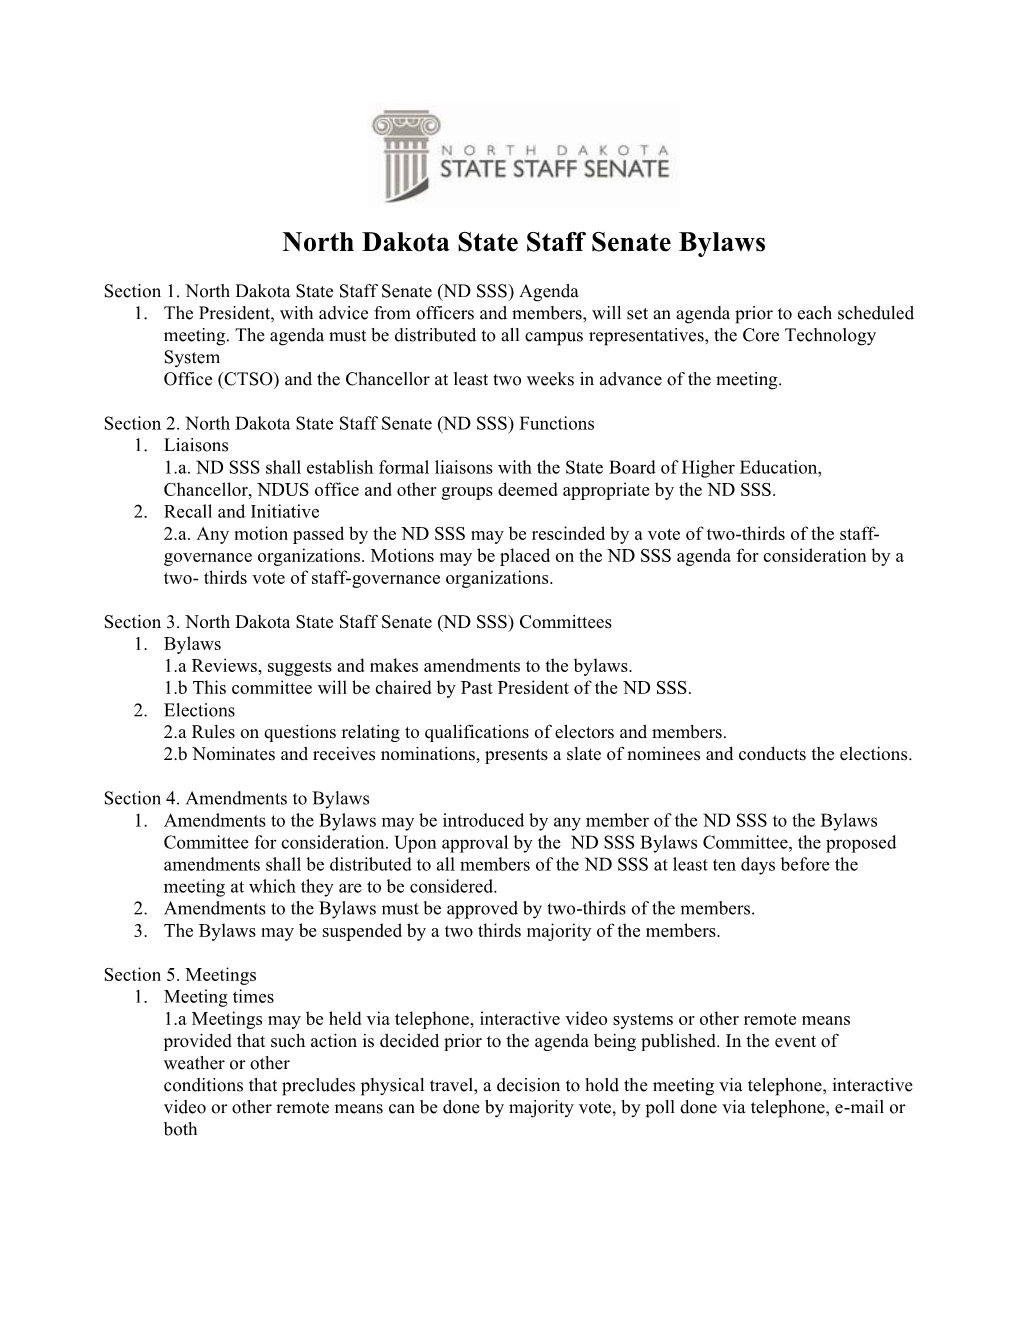 Section 1.North Dakotastatestaffsenate(ND SSS) Agenda